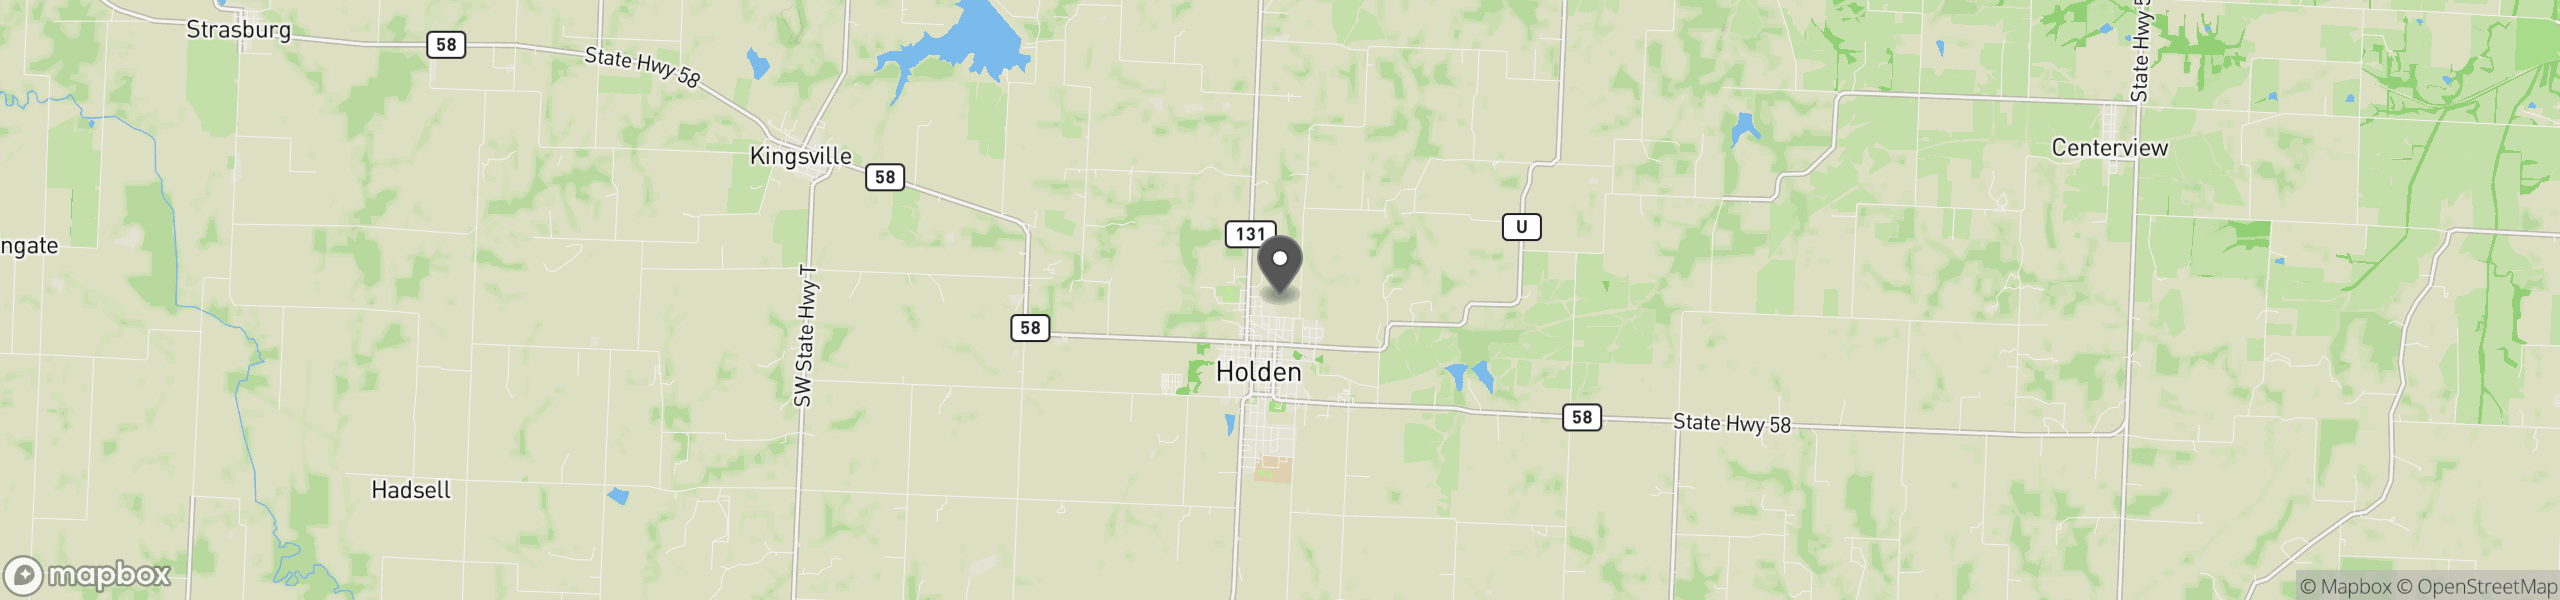 Holden, MO 64040